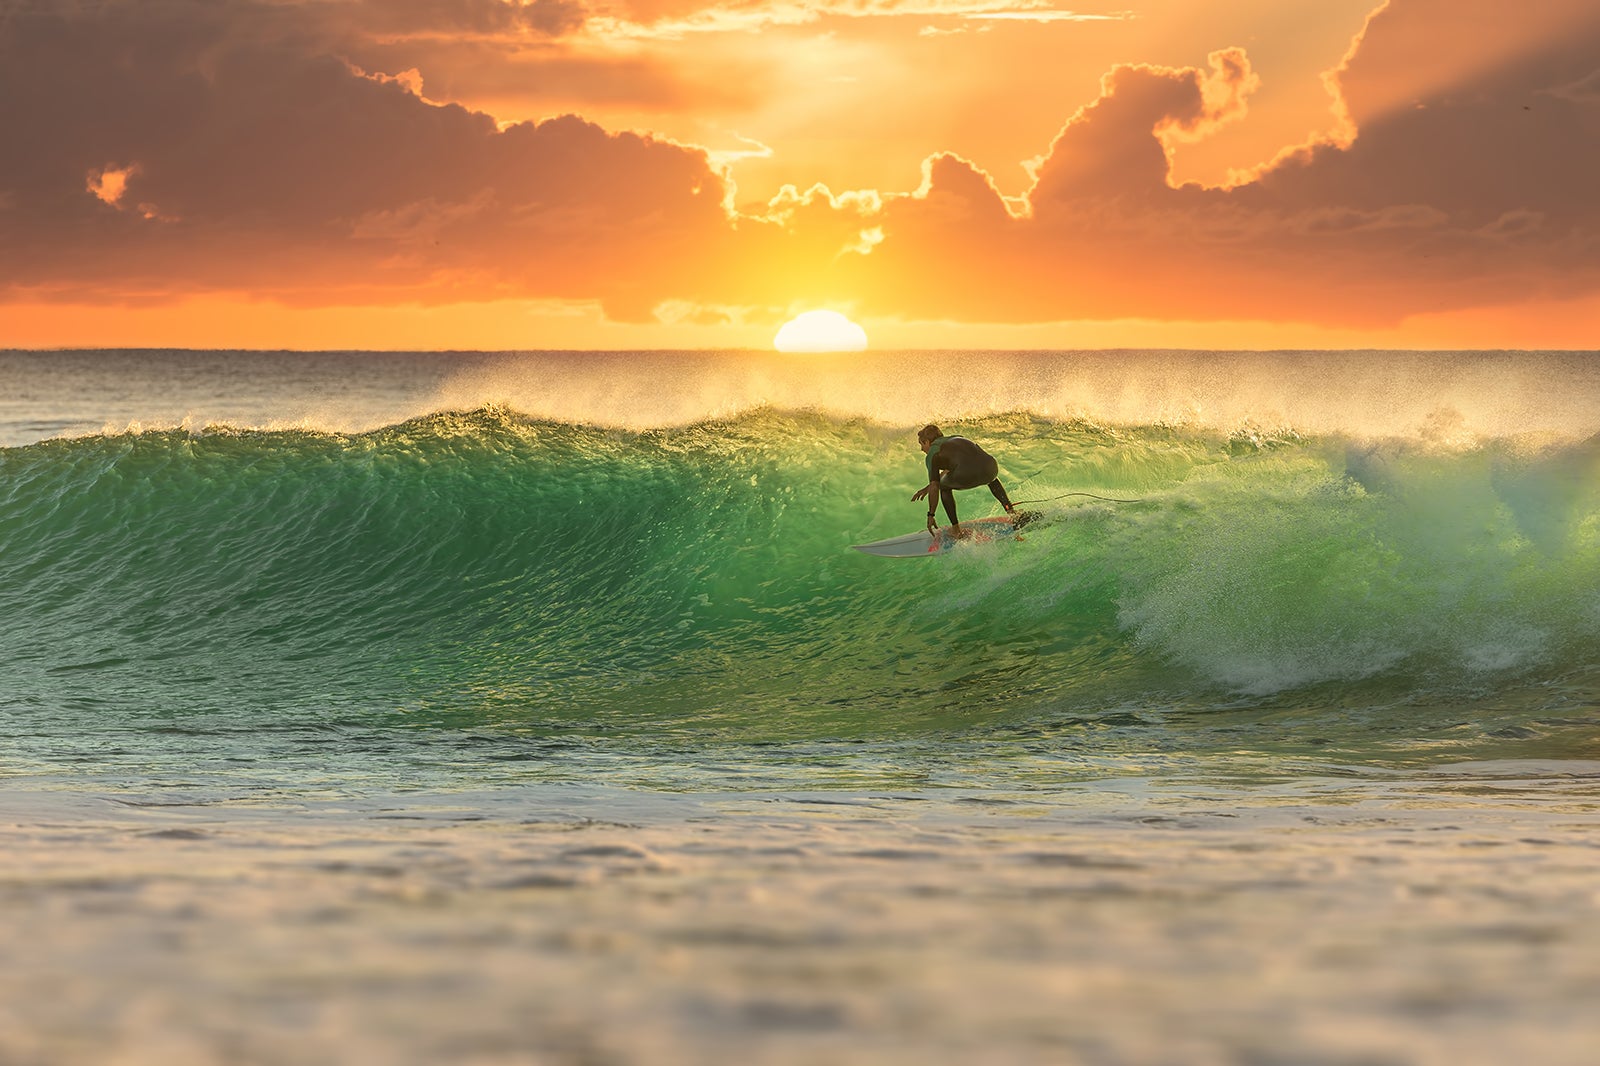 surfing in Miami